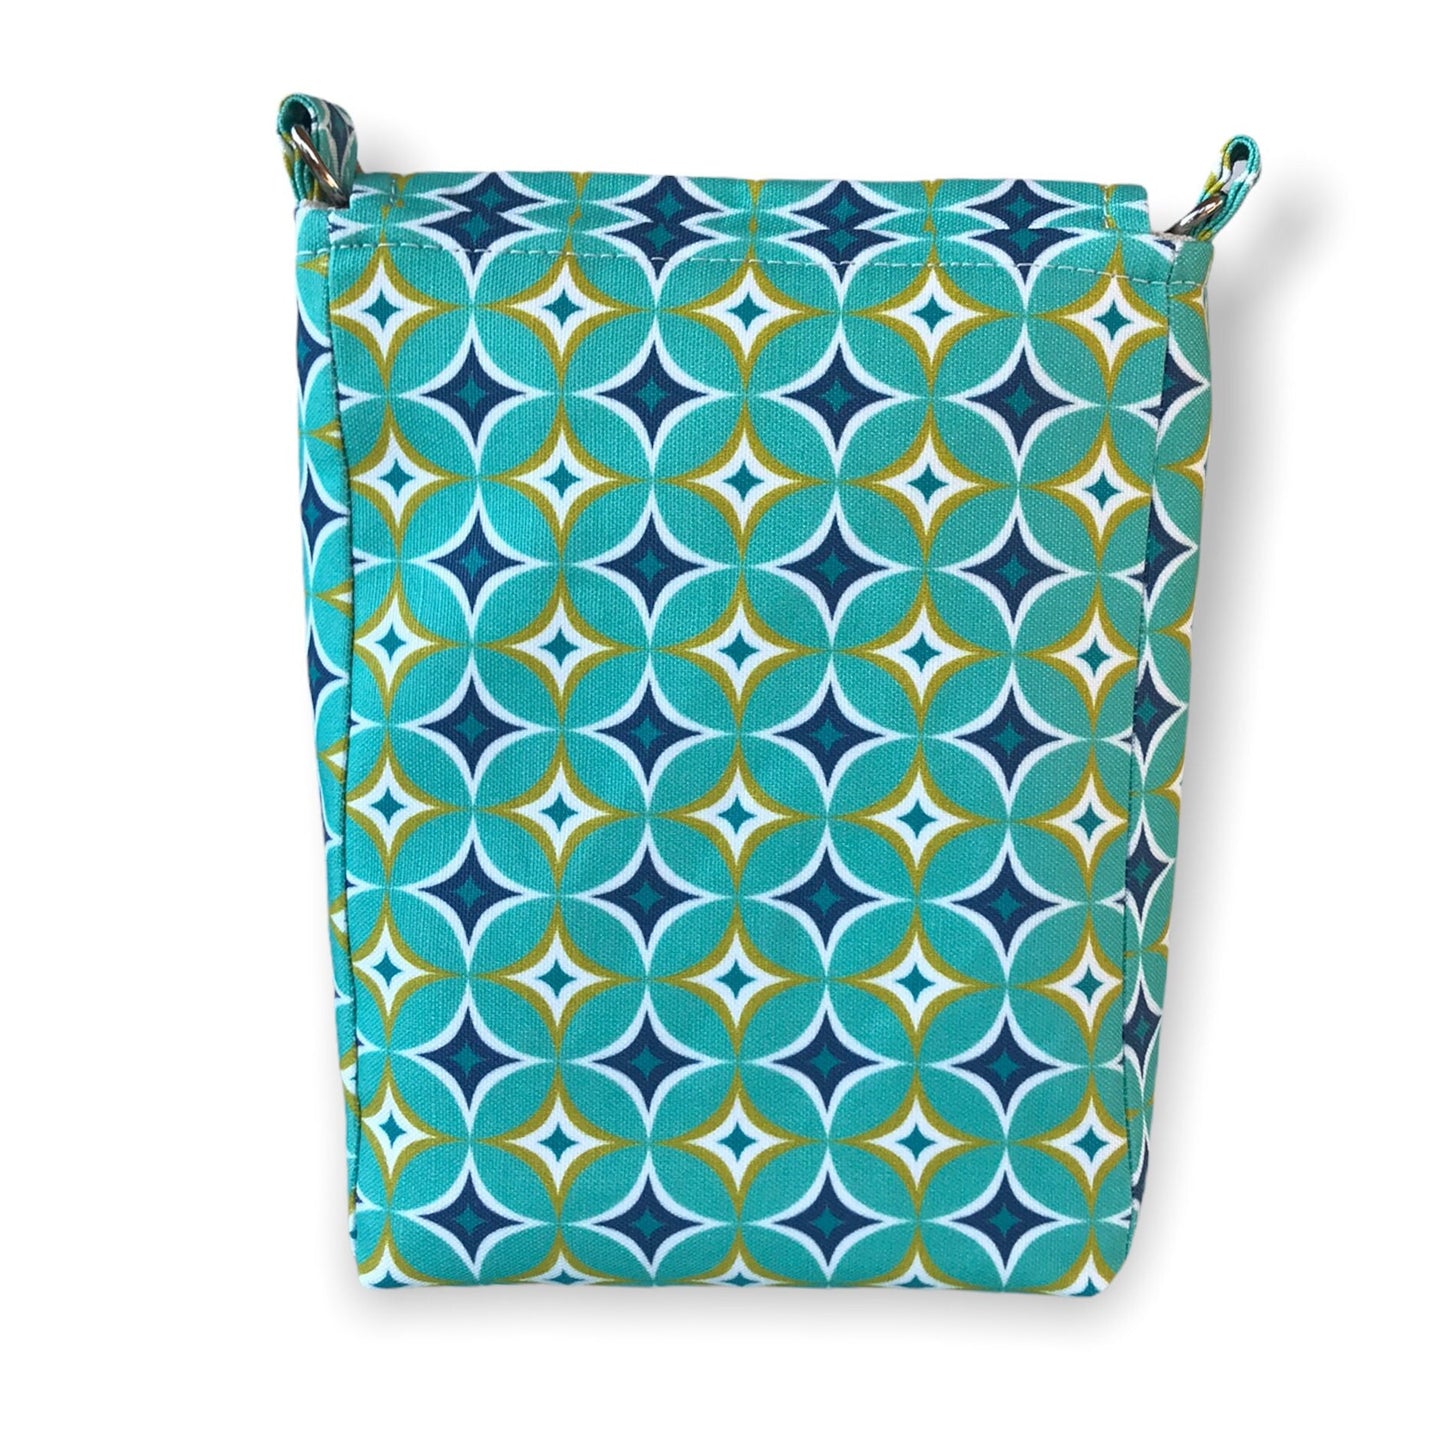 Mid-century modern geometric print crossbody bag, mini messenger style, teal, navy, & yellow, 8.5"x6".